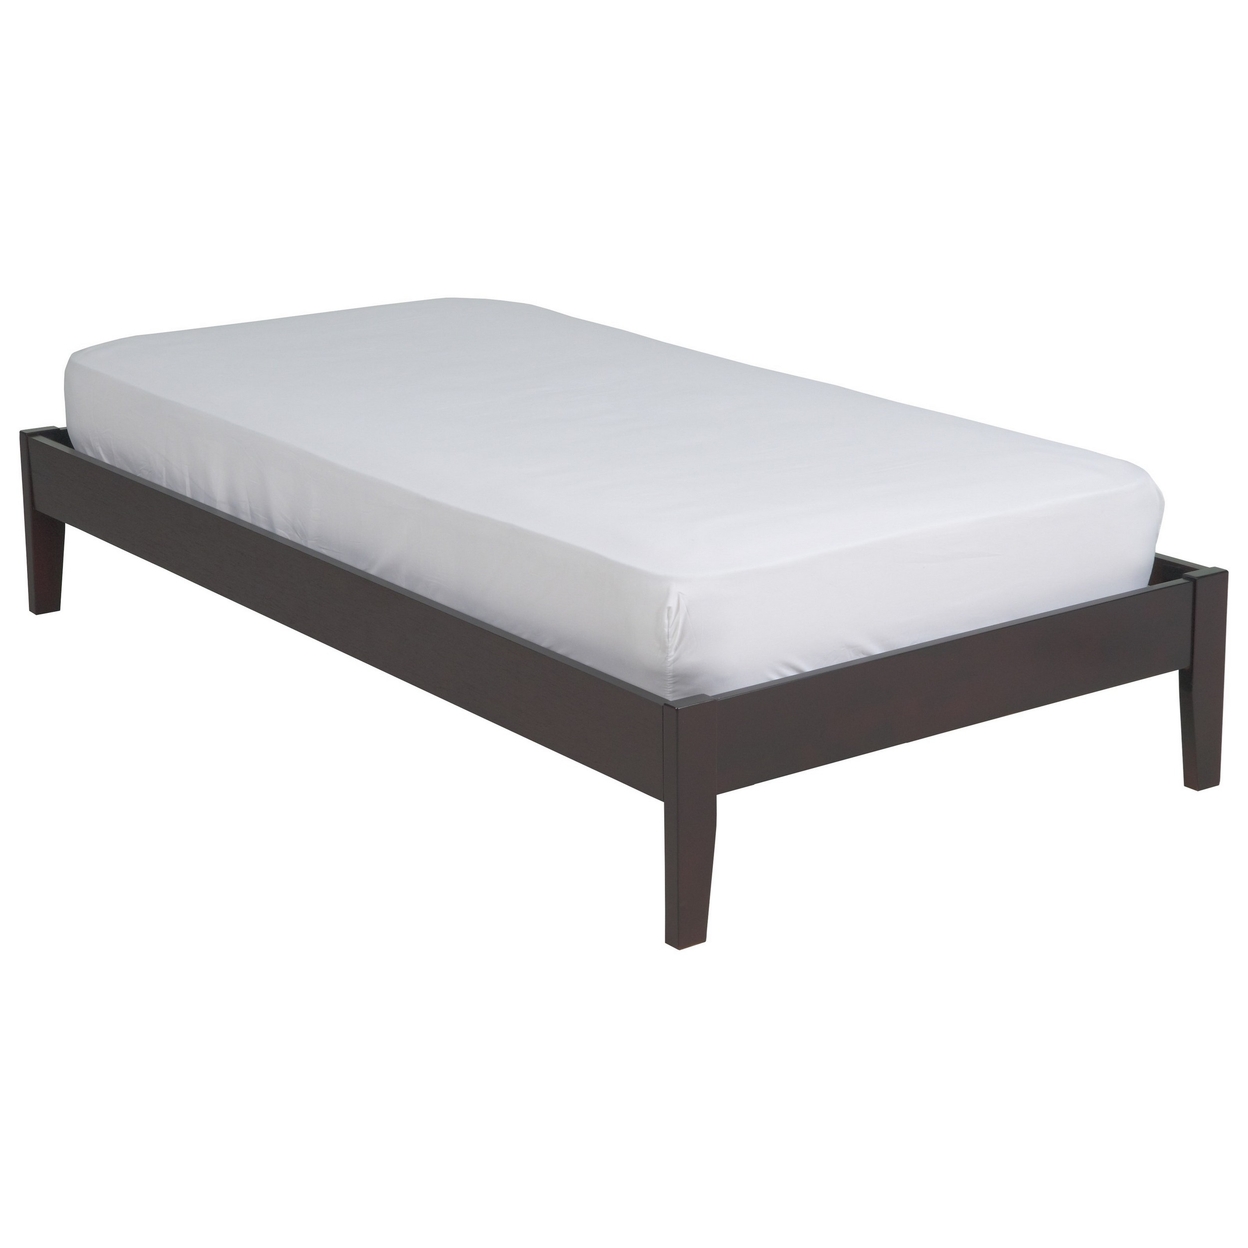 Evelyn Low Profile Full Size Platform Bed, Slats, Rich Espresso Brown Wood- Saltoro Sherpi